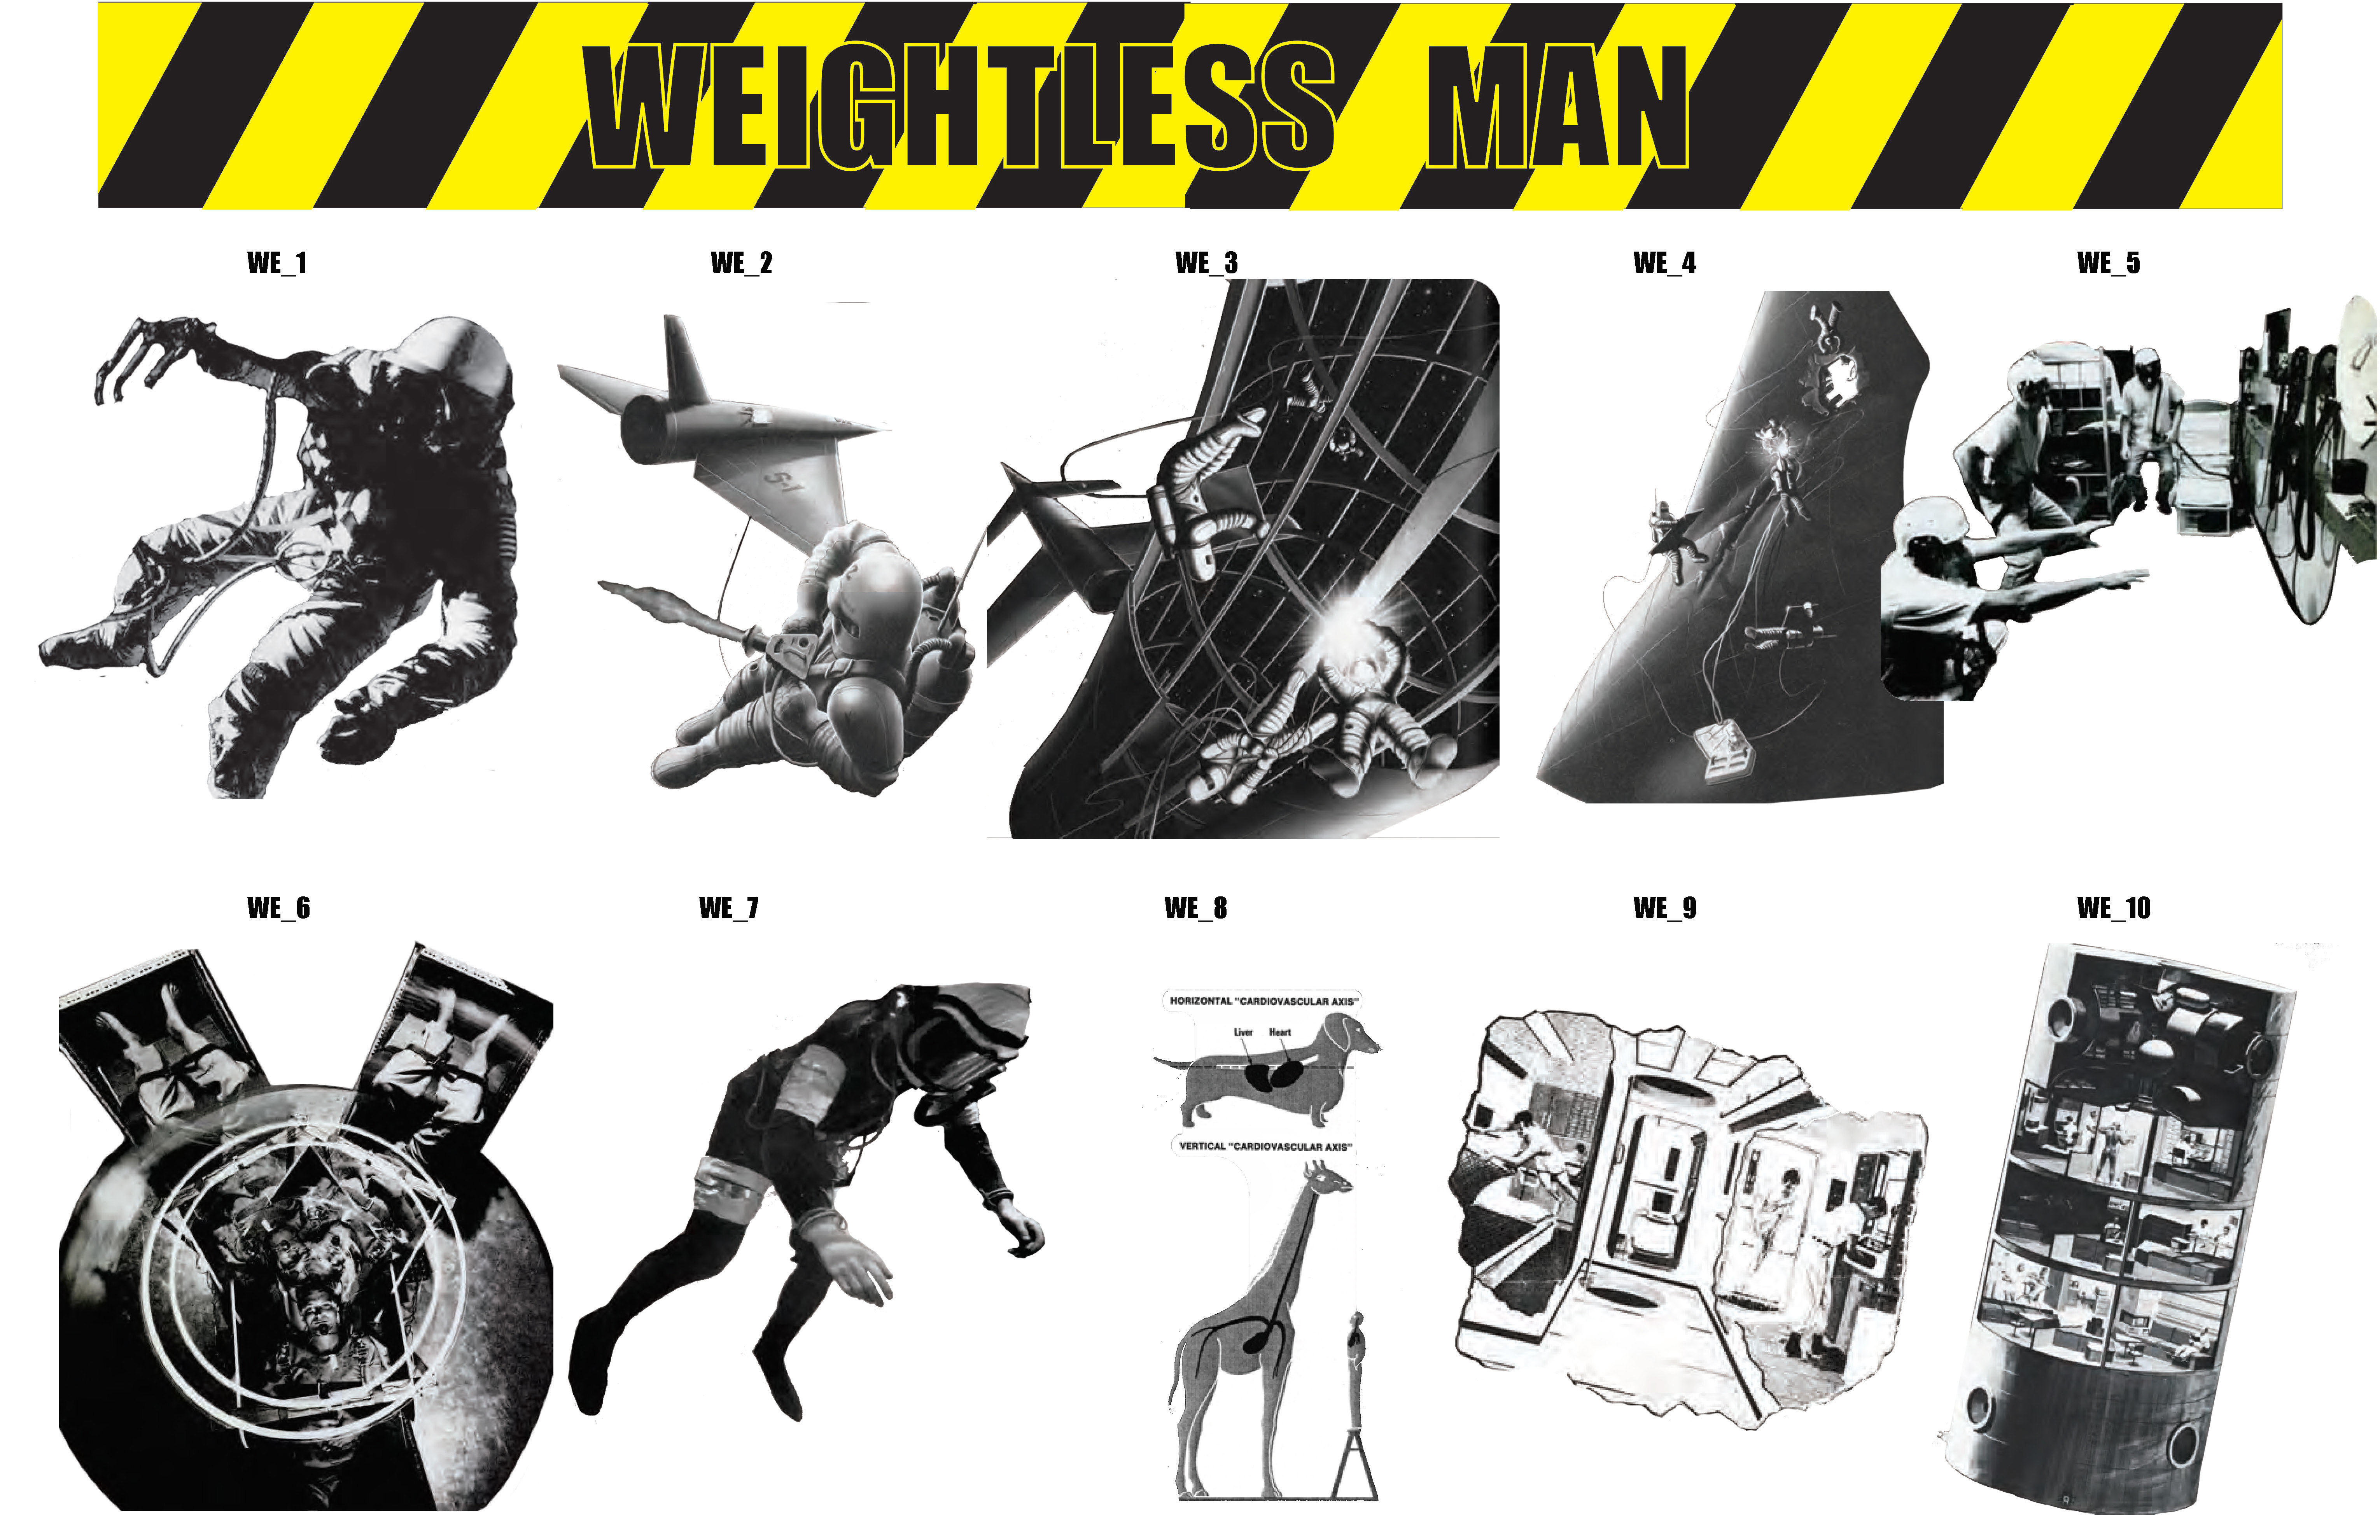 Weightless Man poster illustration collage